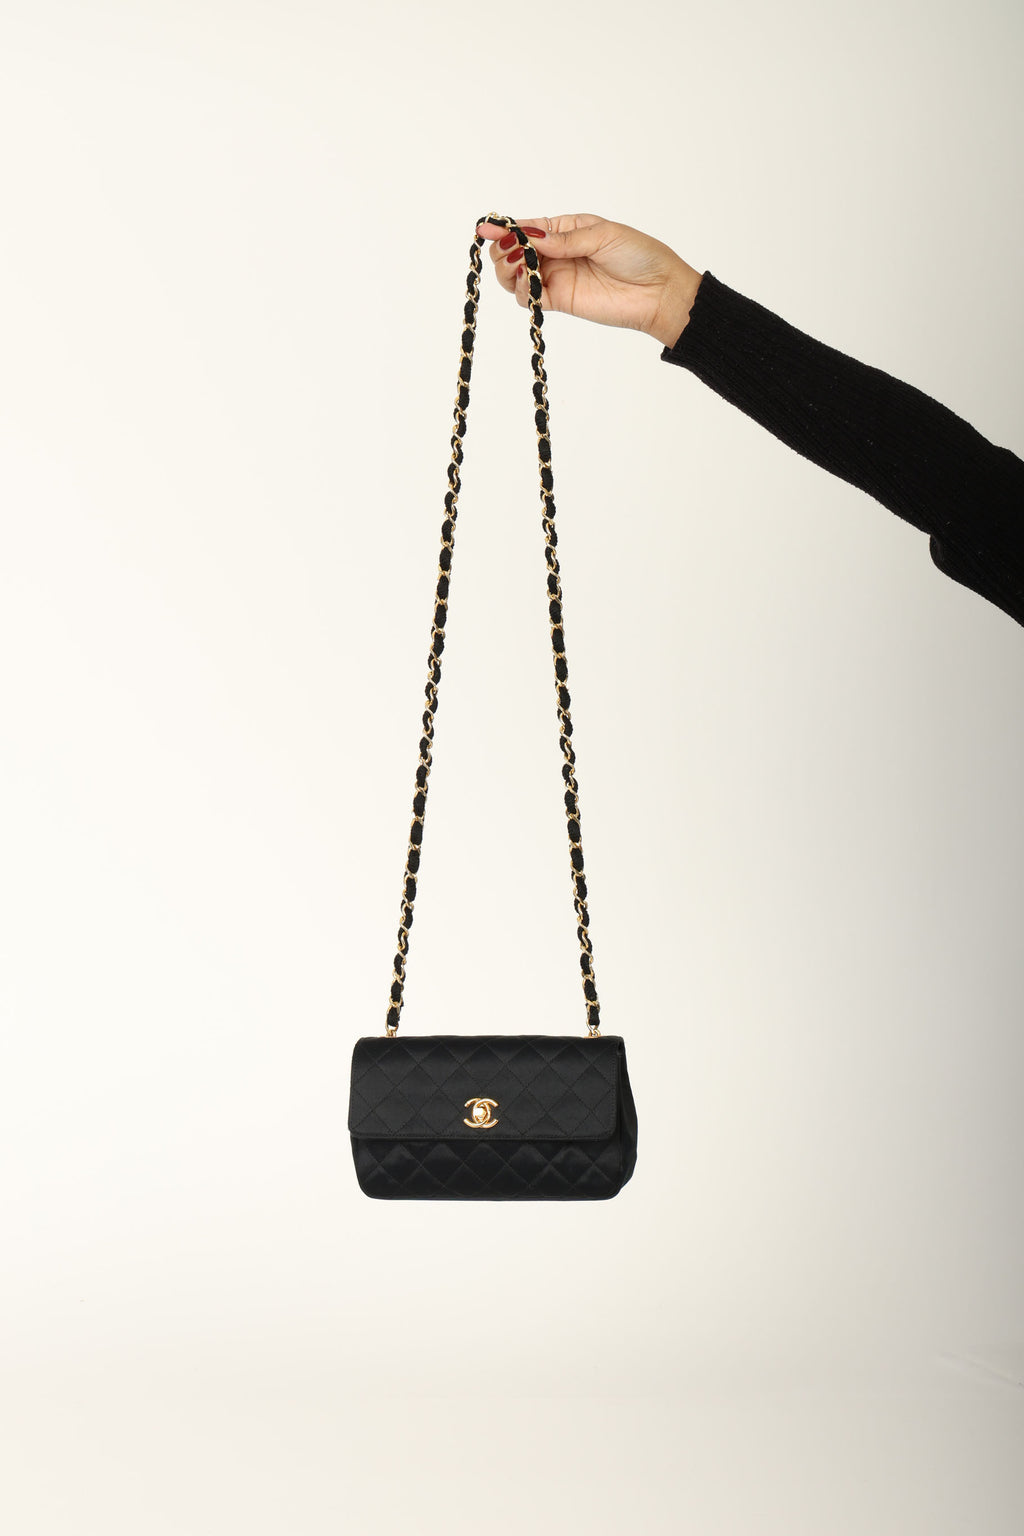 Chanel 1989 Satin Mini Bag